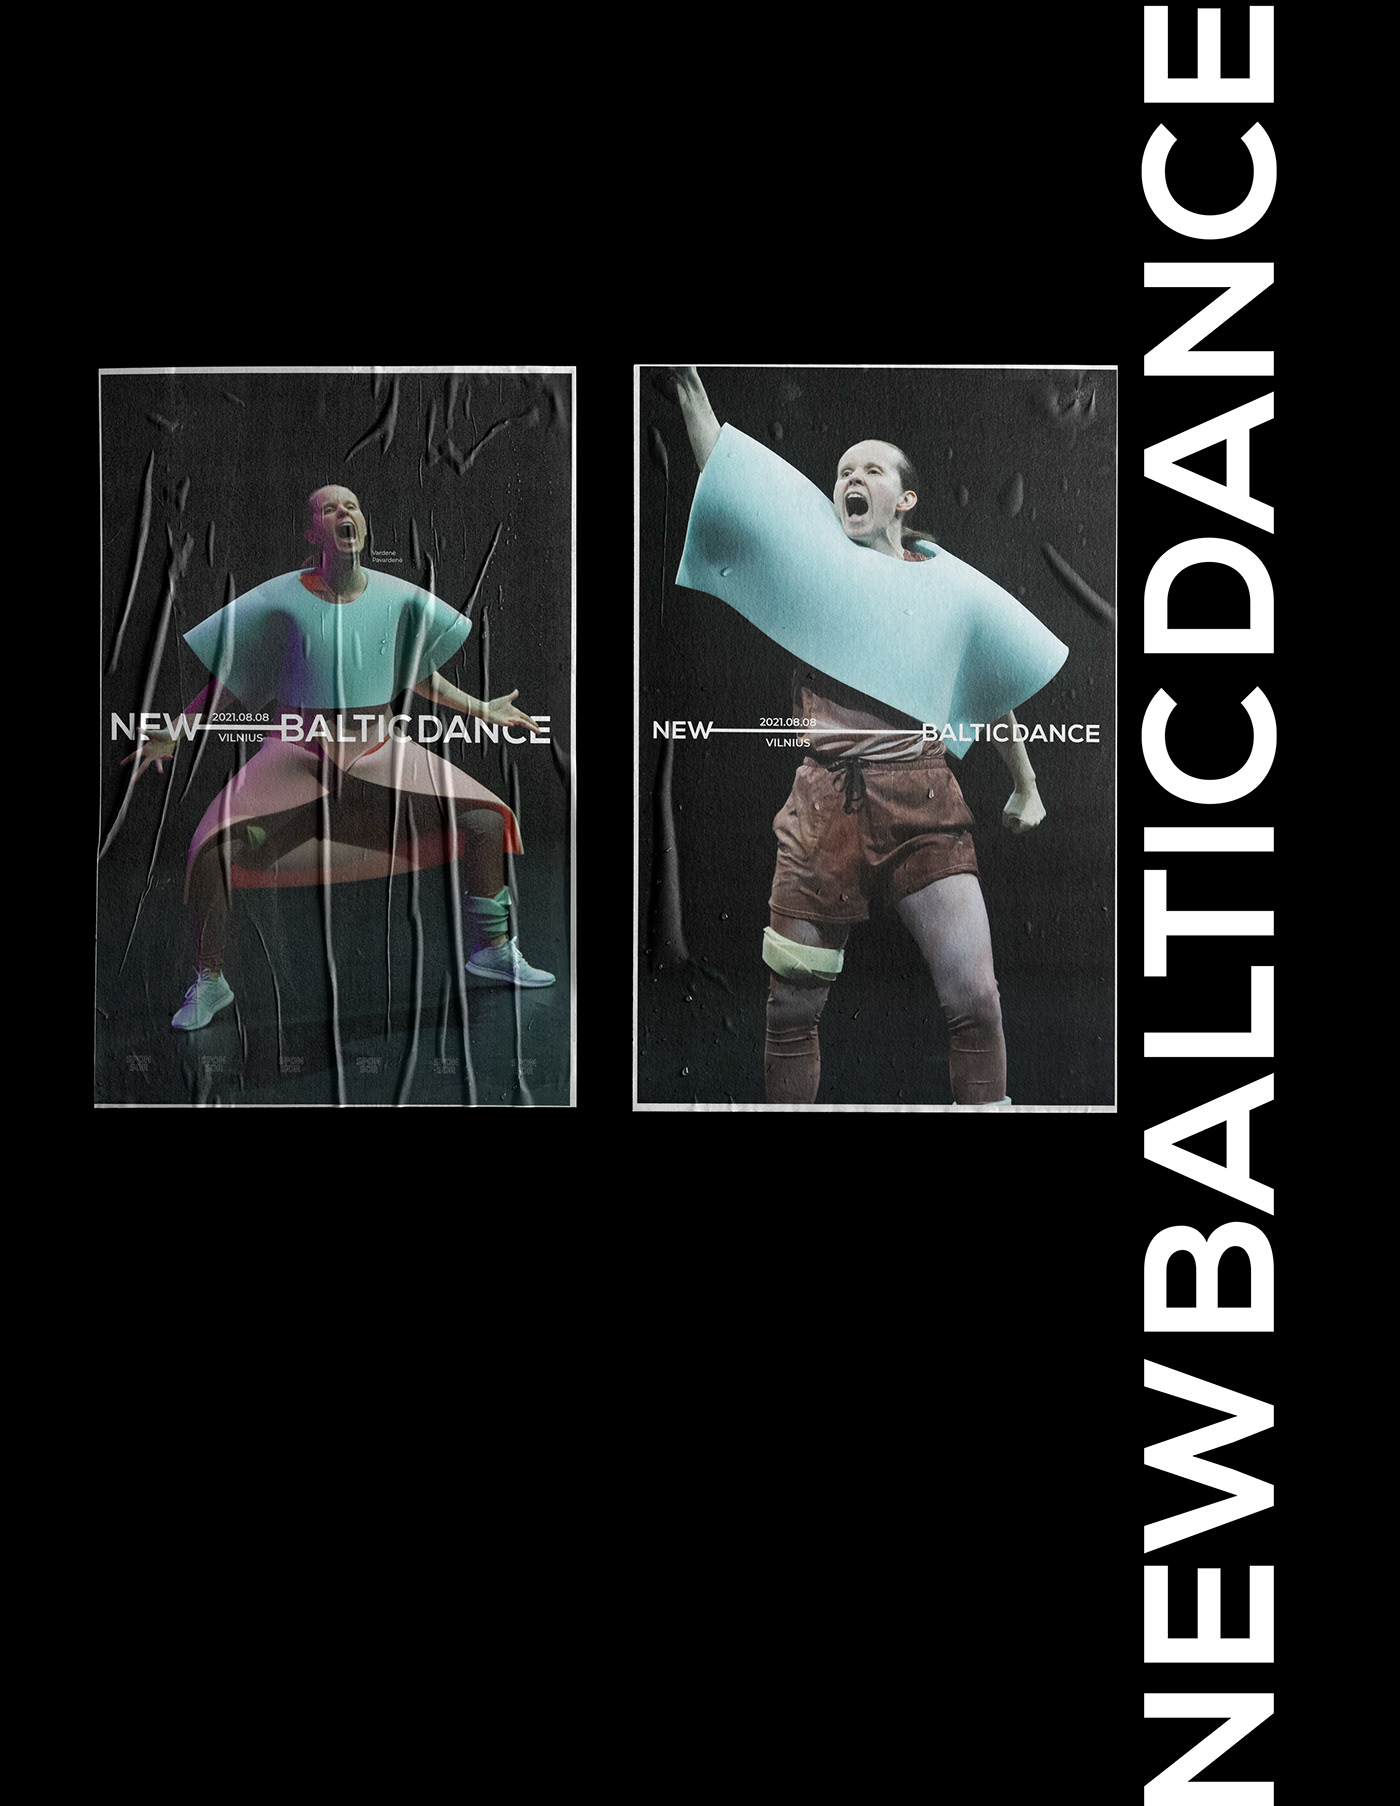 Marios Agency new baltic dance visual identity